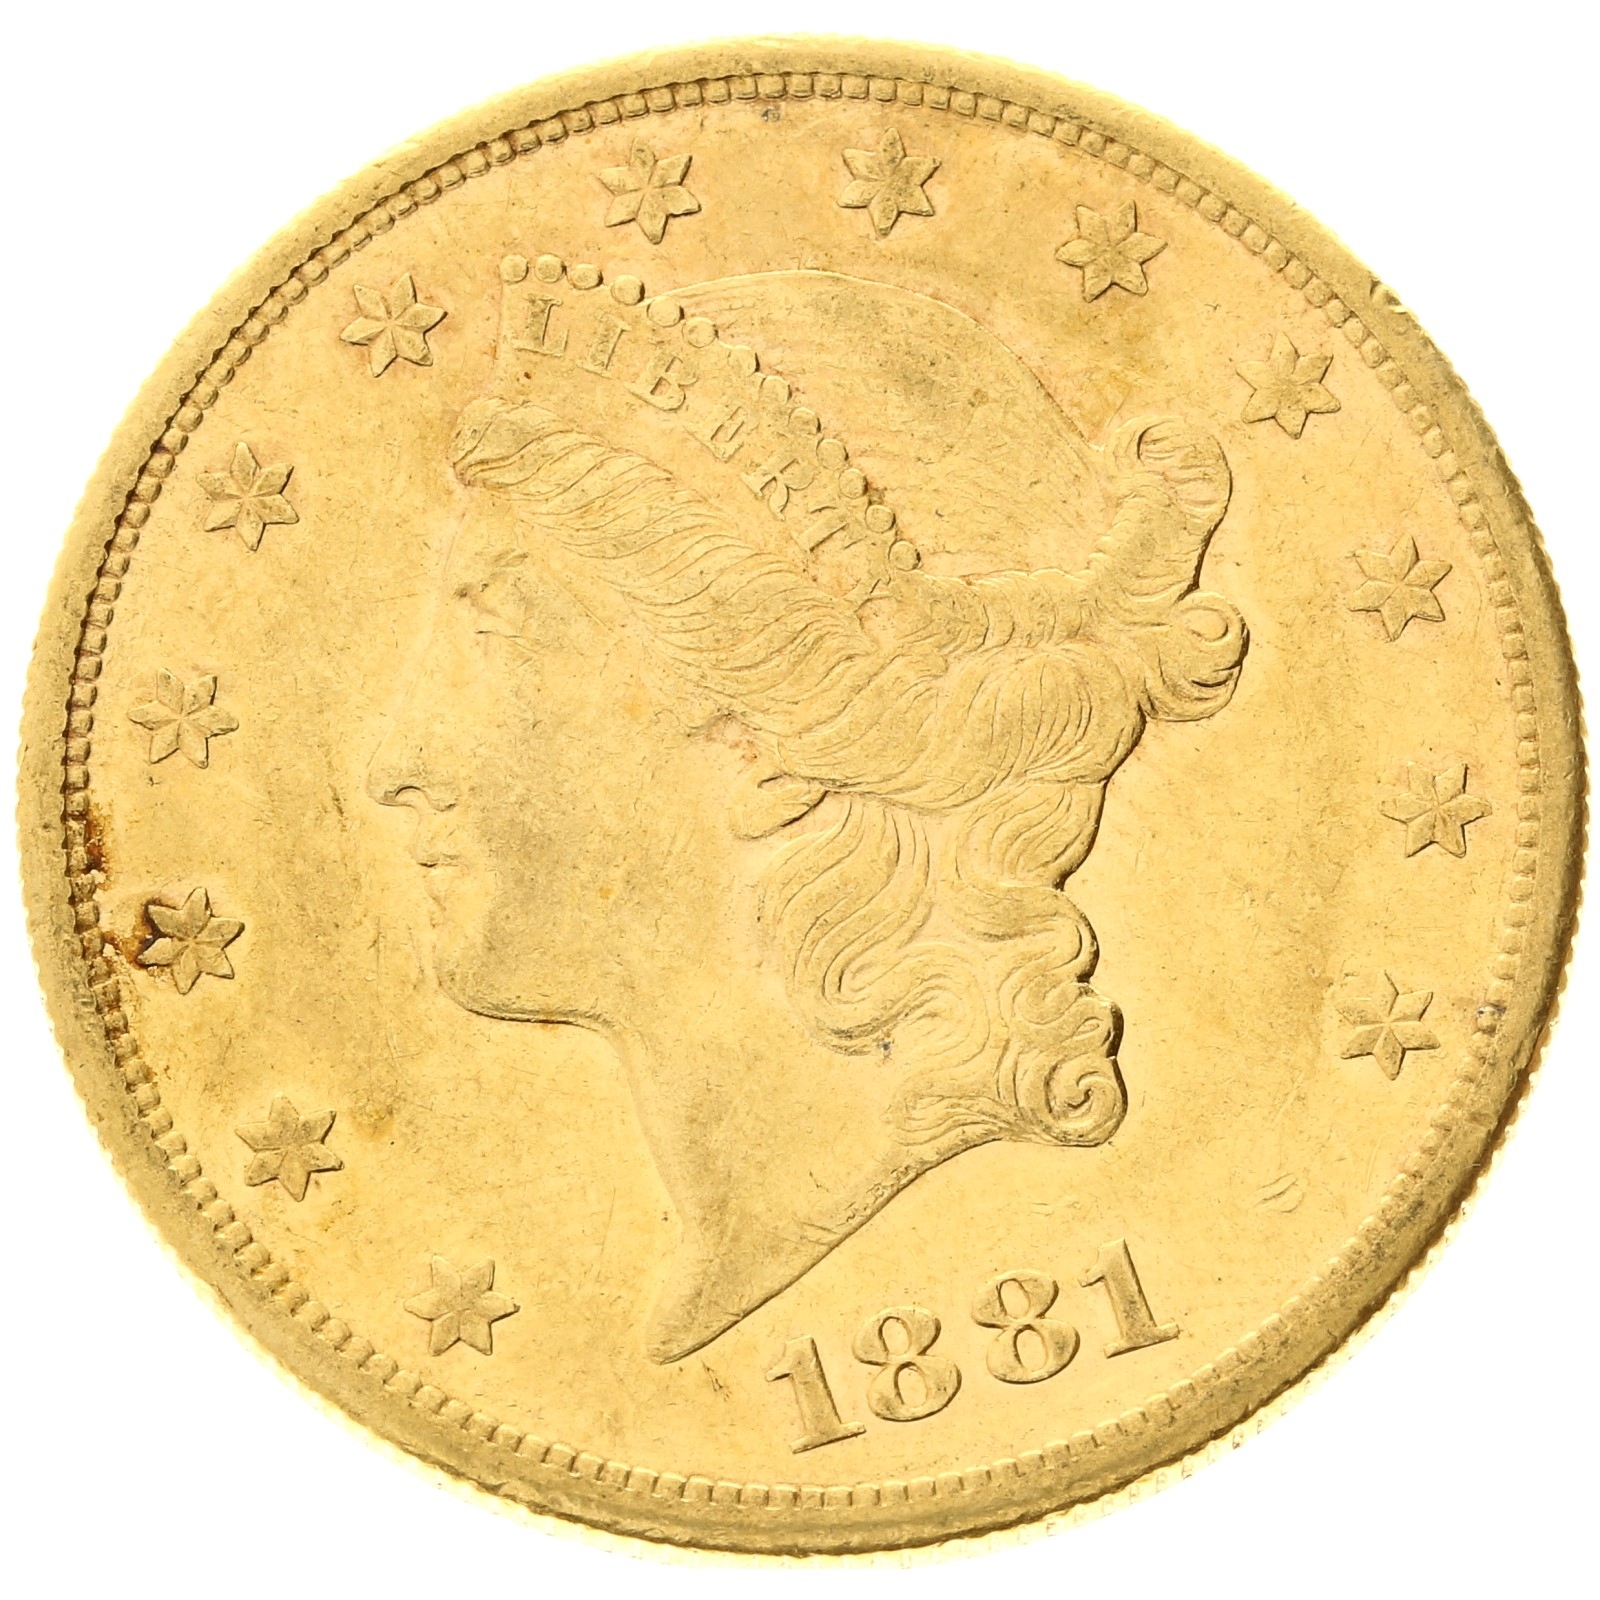 USA - 20 dollars - 1881 - S - Liberty Head